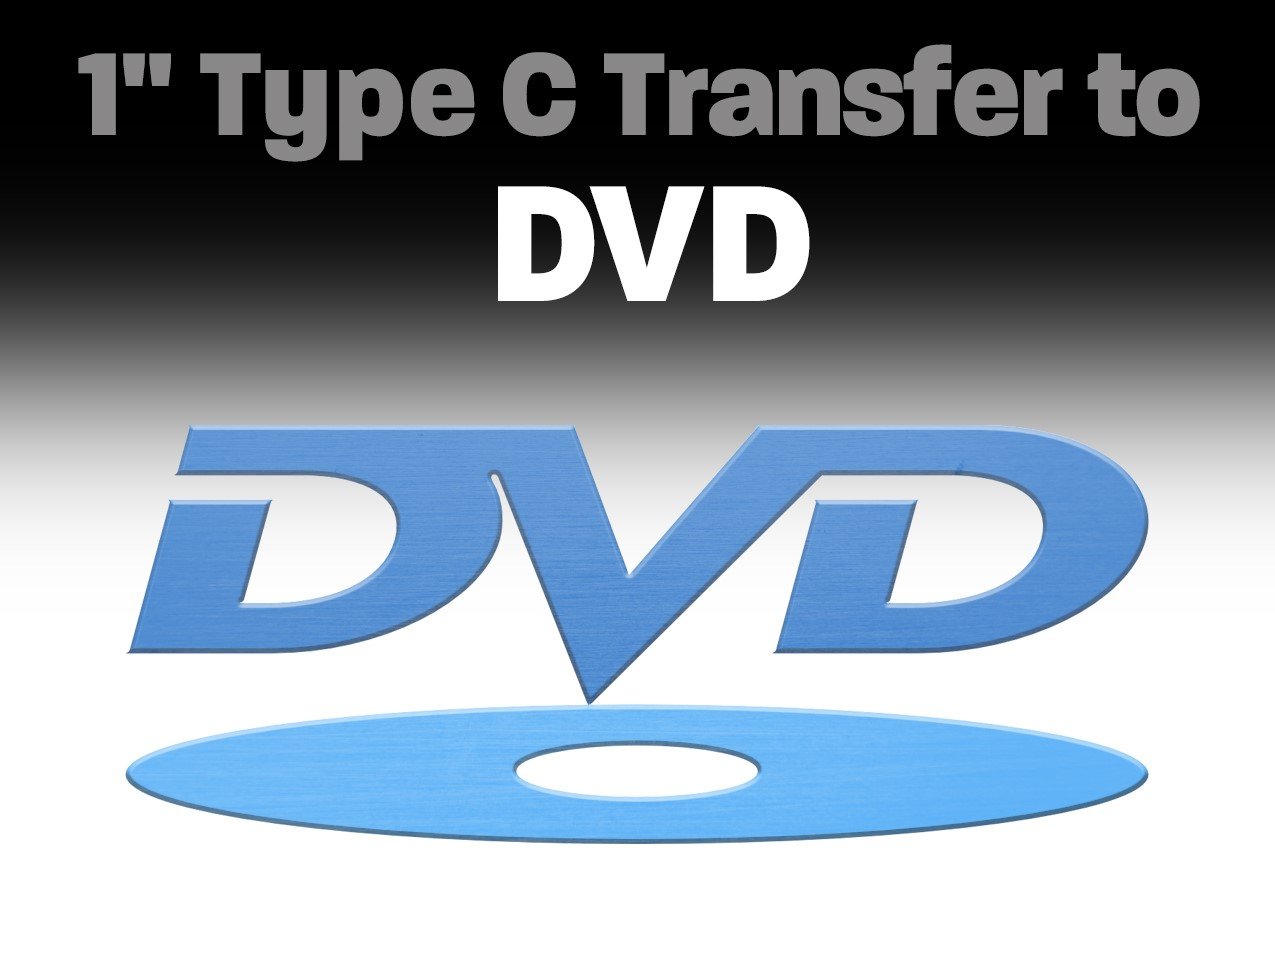 1" Type C Transfer to DVD